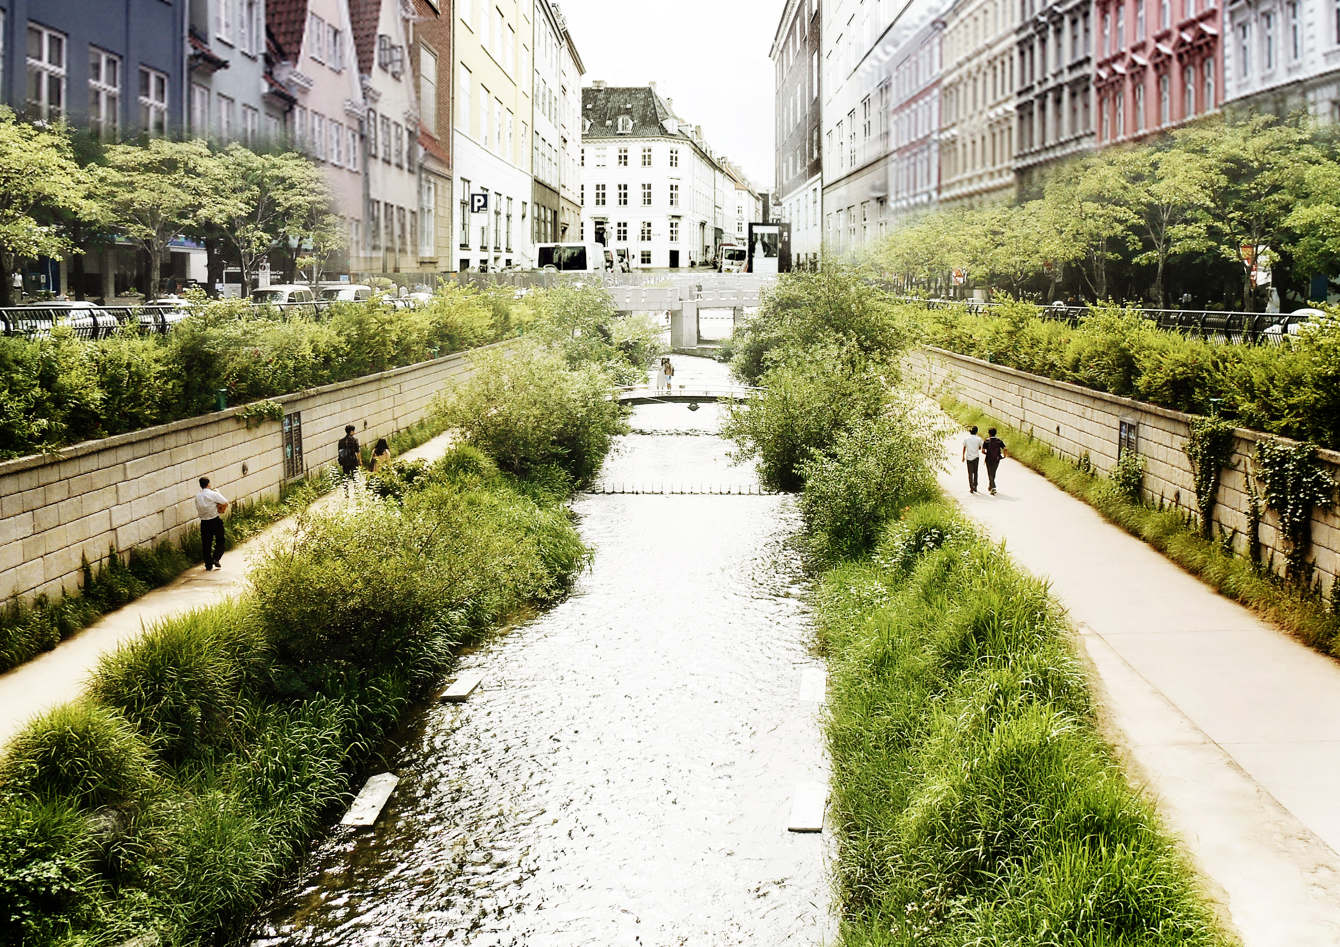 THE CANAL CITY IN COPENHAGEN IN 2050